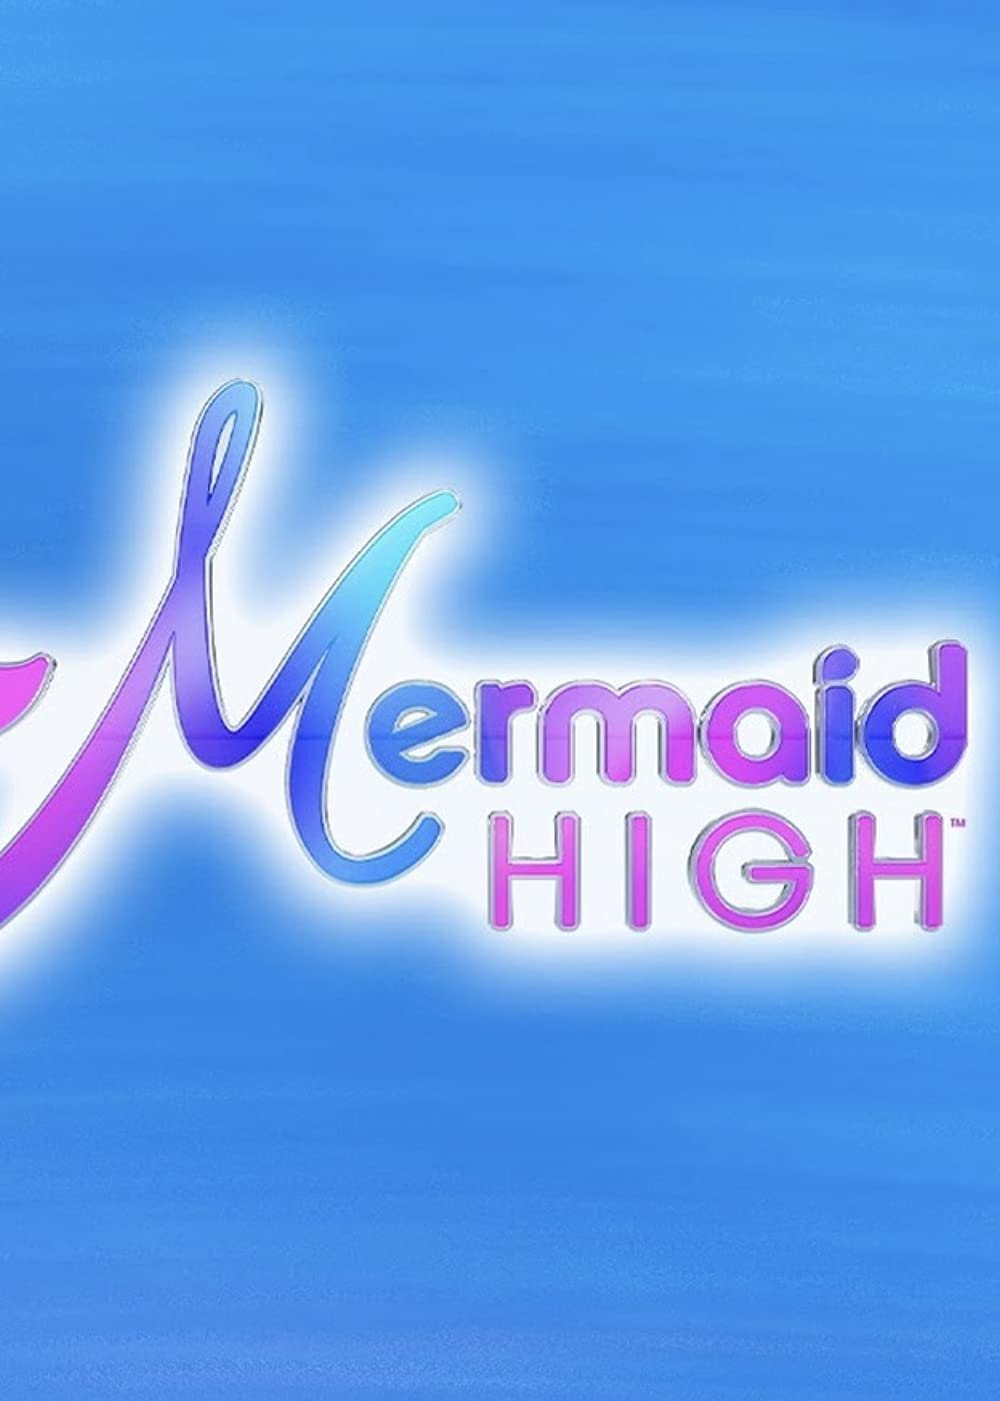 Mermaid High